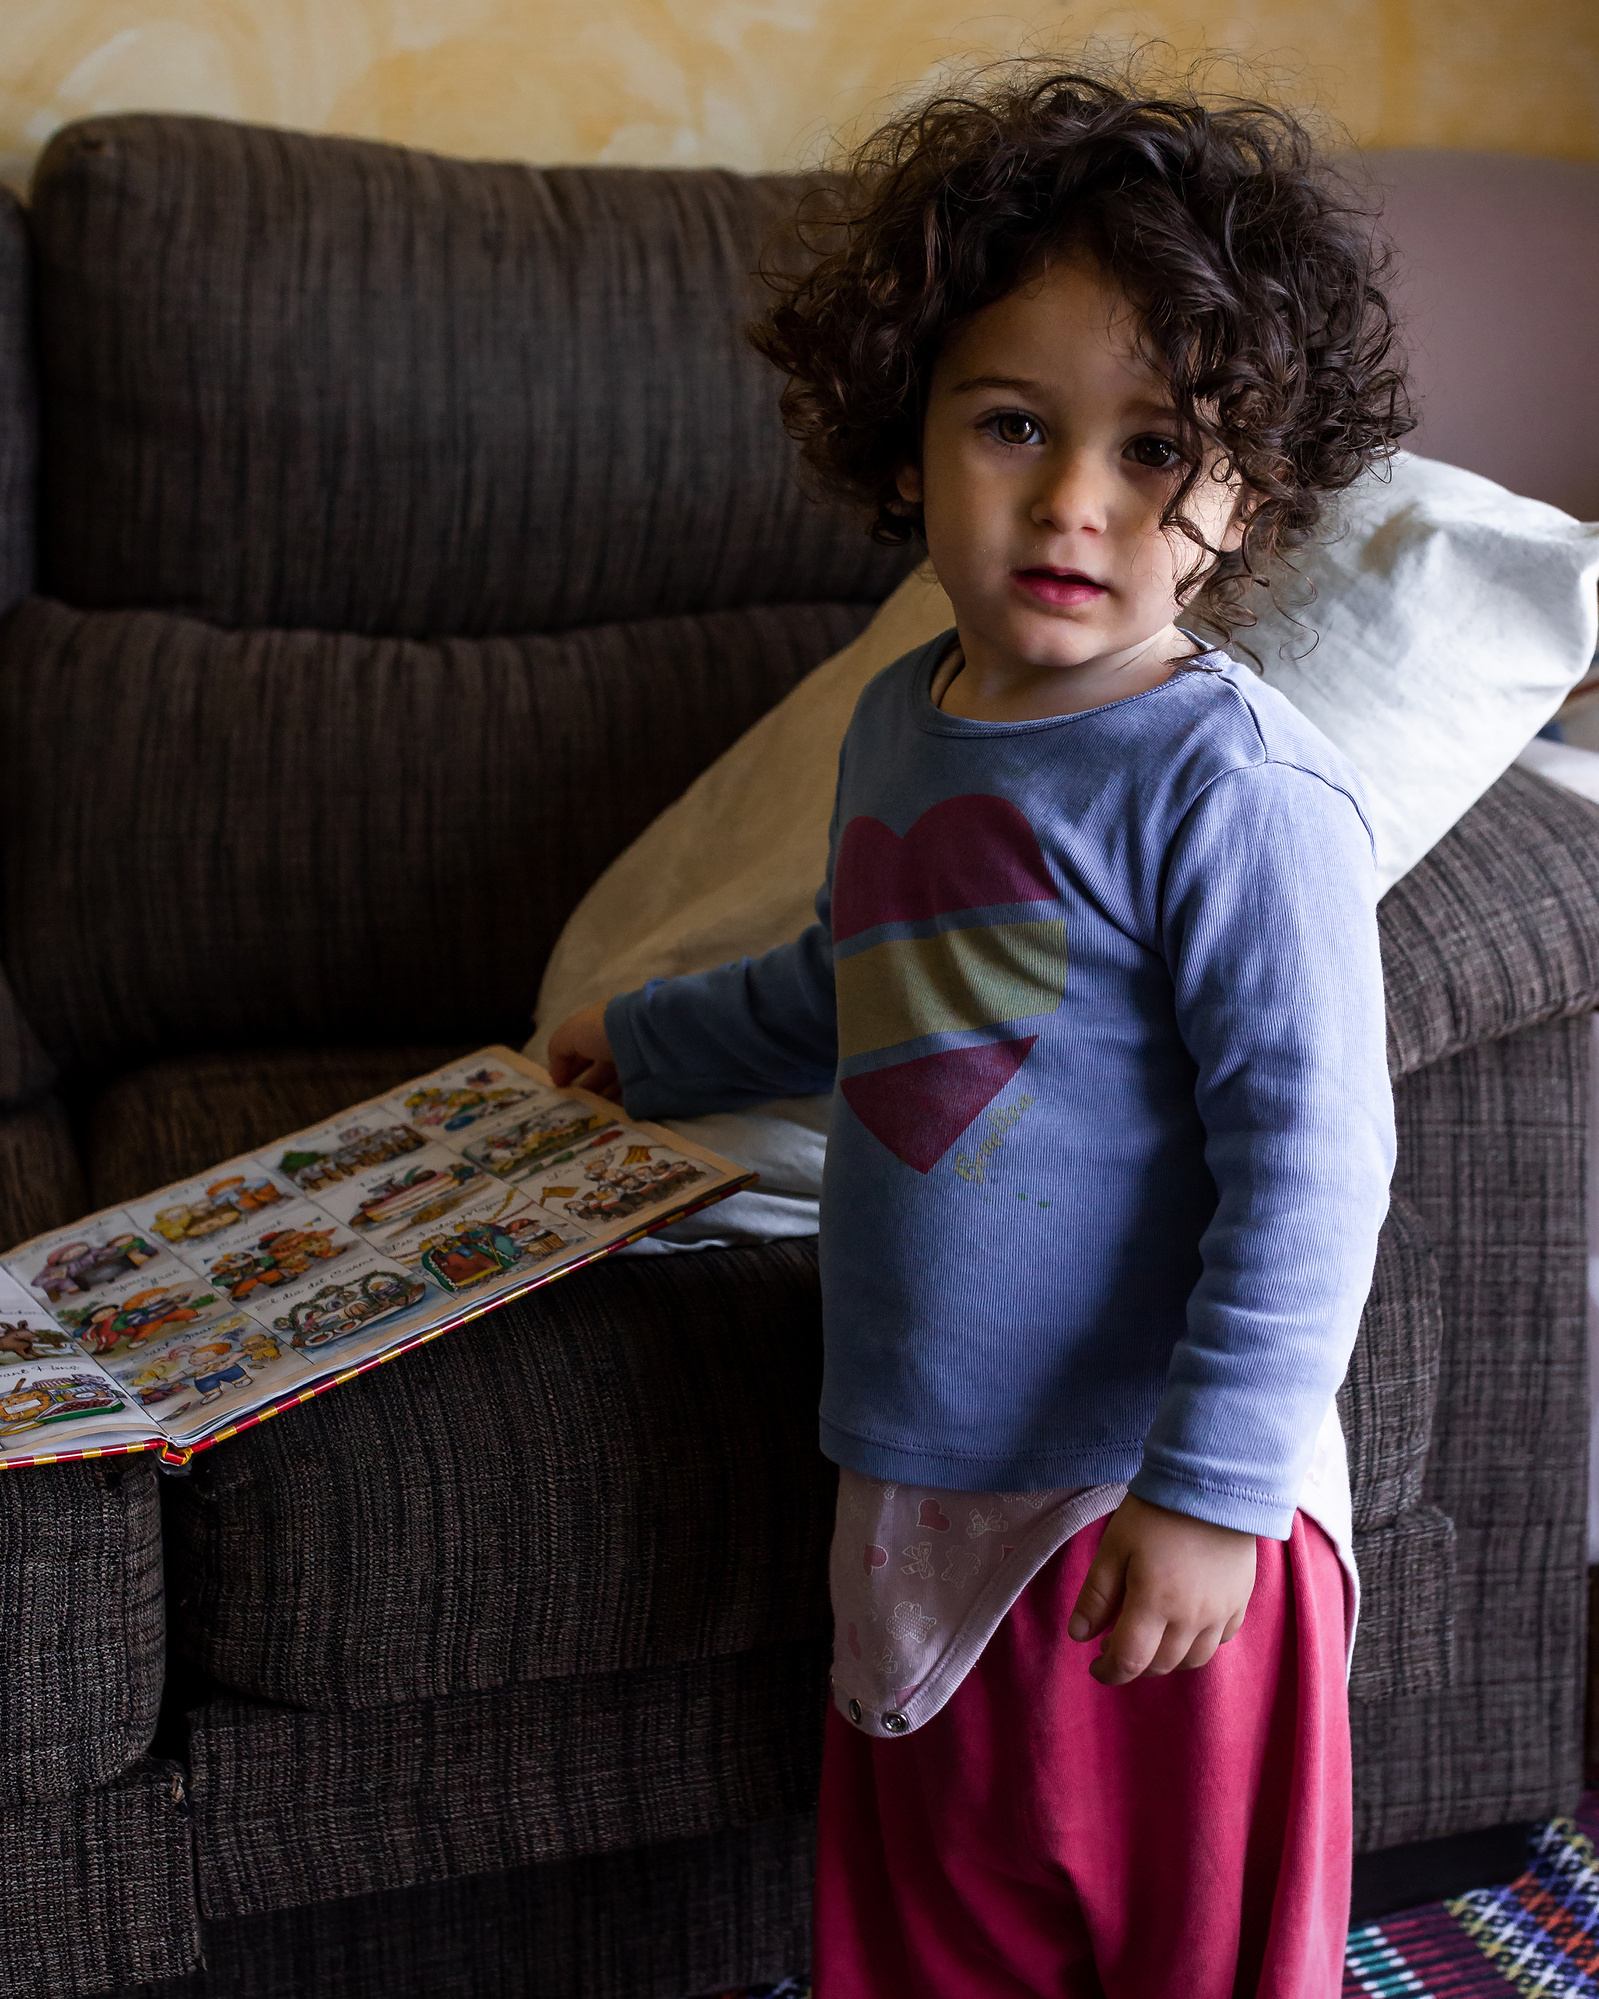 niña con su libro favorito en su apartamento en Girona, cataluña, españa. 
Manuela Franjou, fotografia de familia